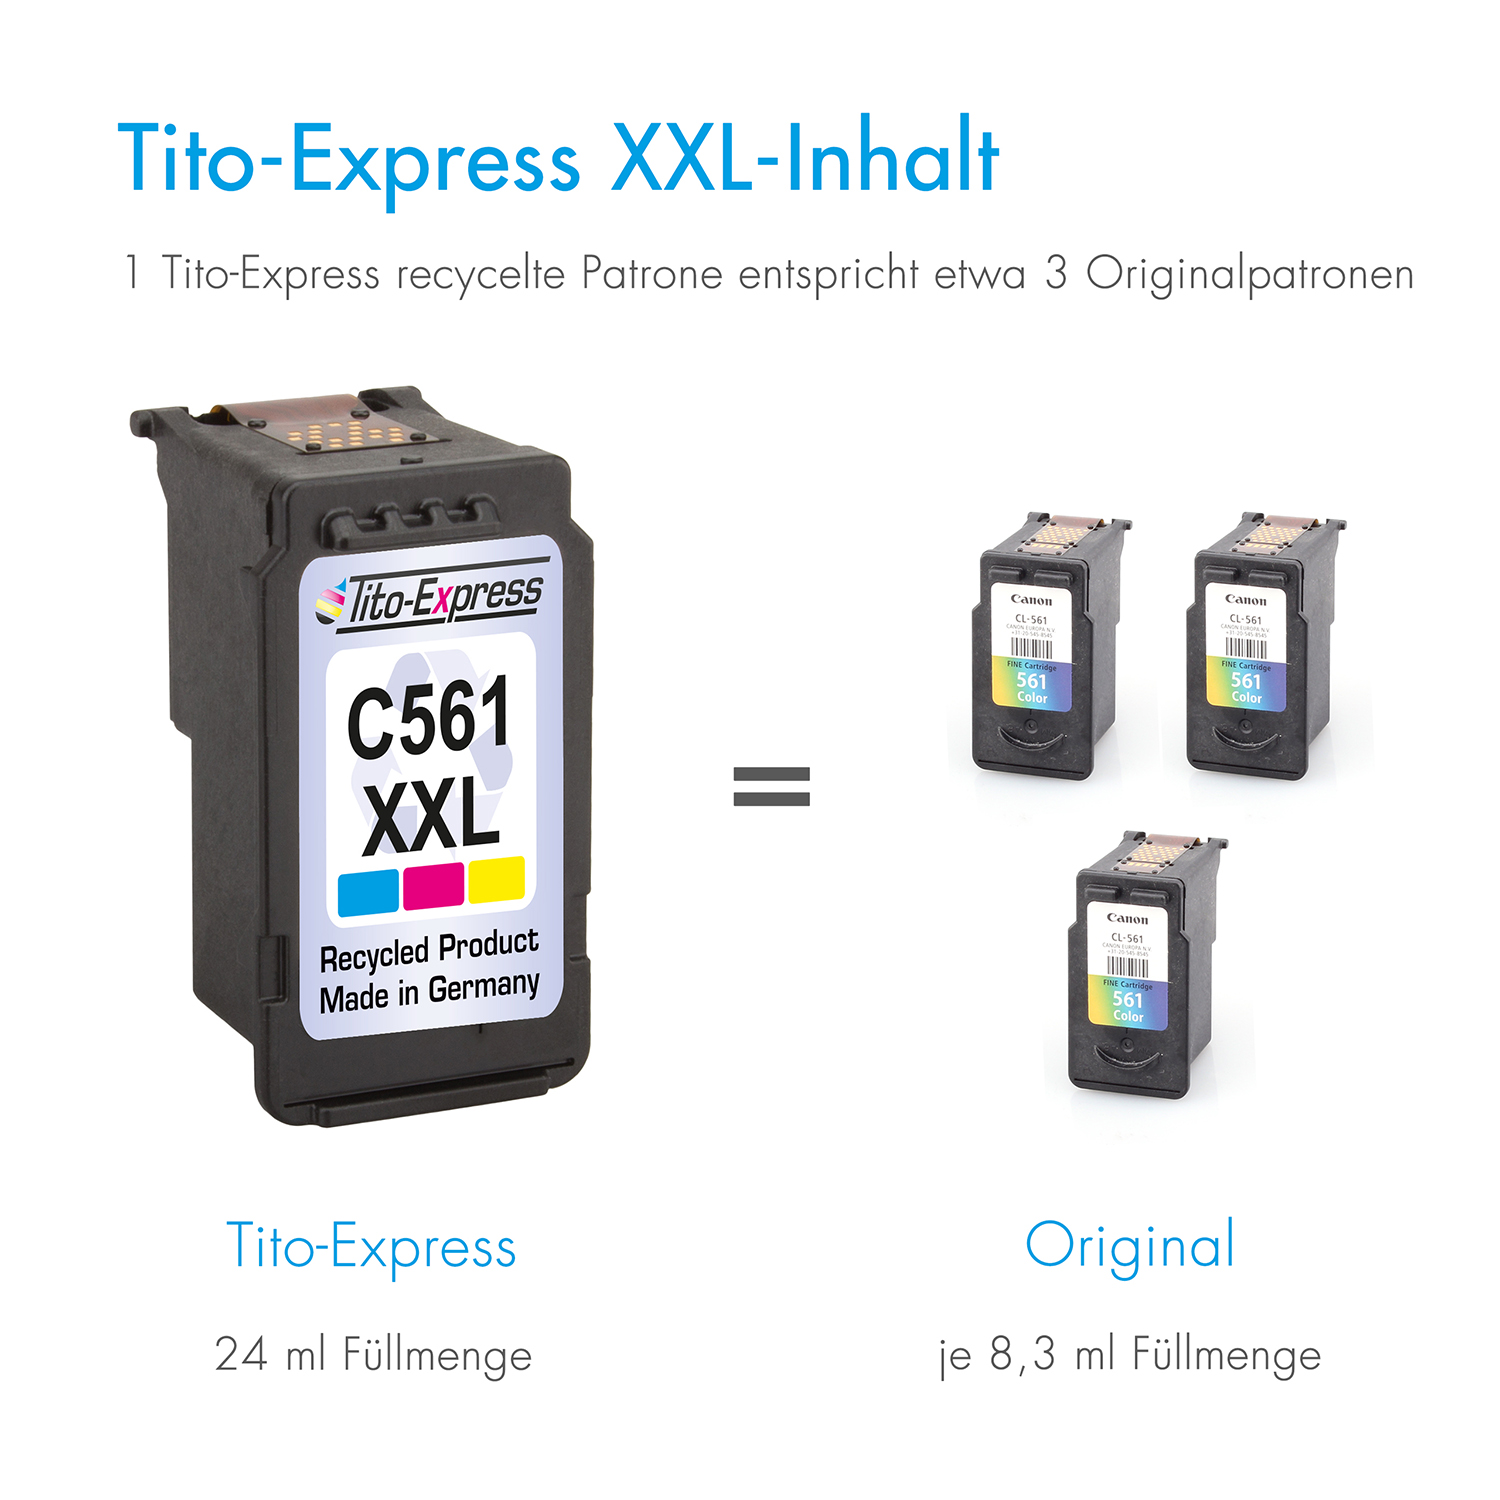 TITO-EXPRESS Tintenpatrone color recycelte (3730 yellow) ersetzt PLATINUMSERIE CL-561XXL (cyan, 001) Patrone 1 magenta, Canon C